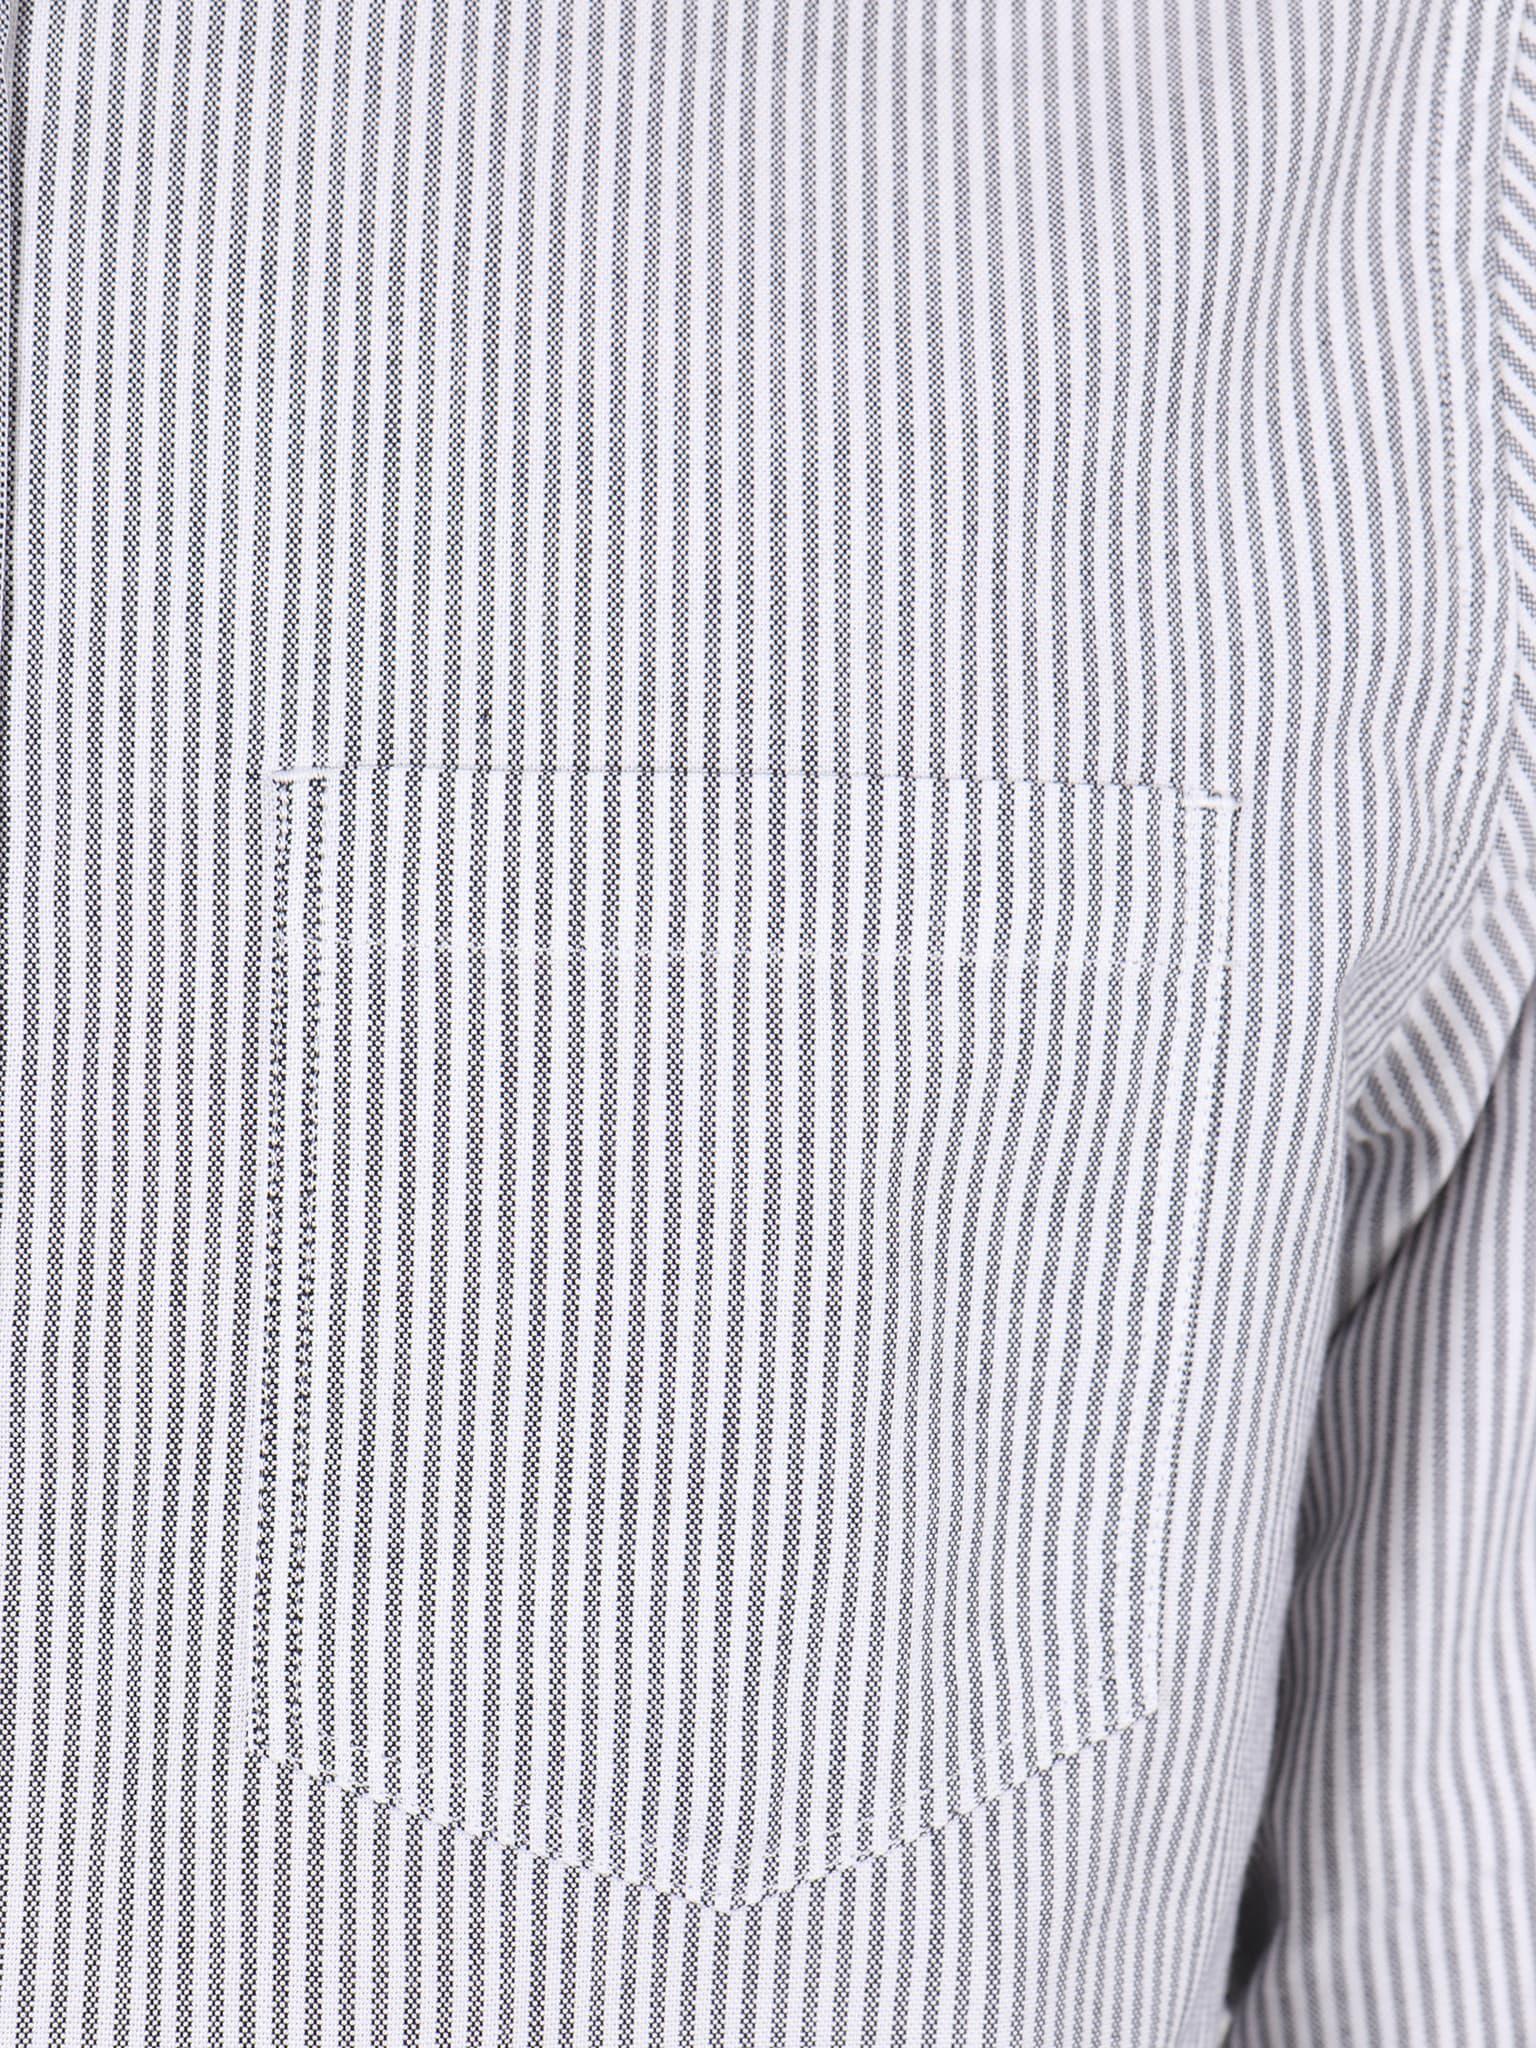 Anton Oxford Shirt Magnet Grey Stripe N40-0456-1073